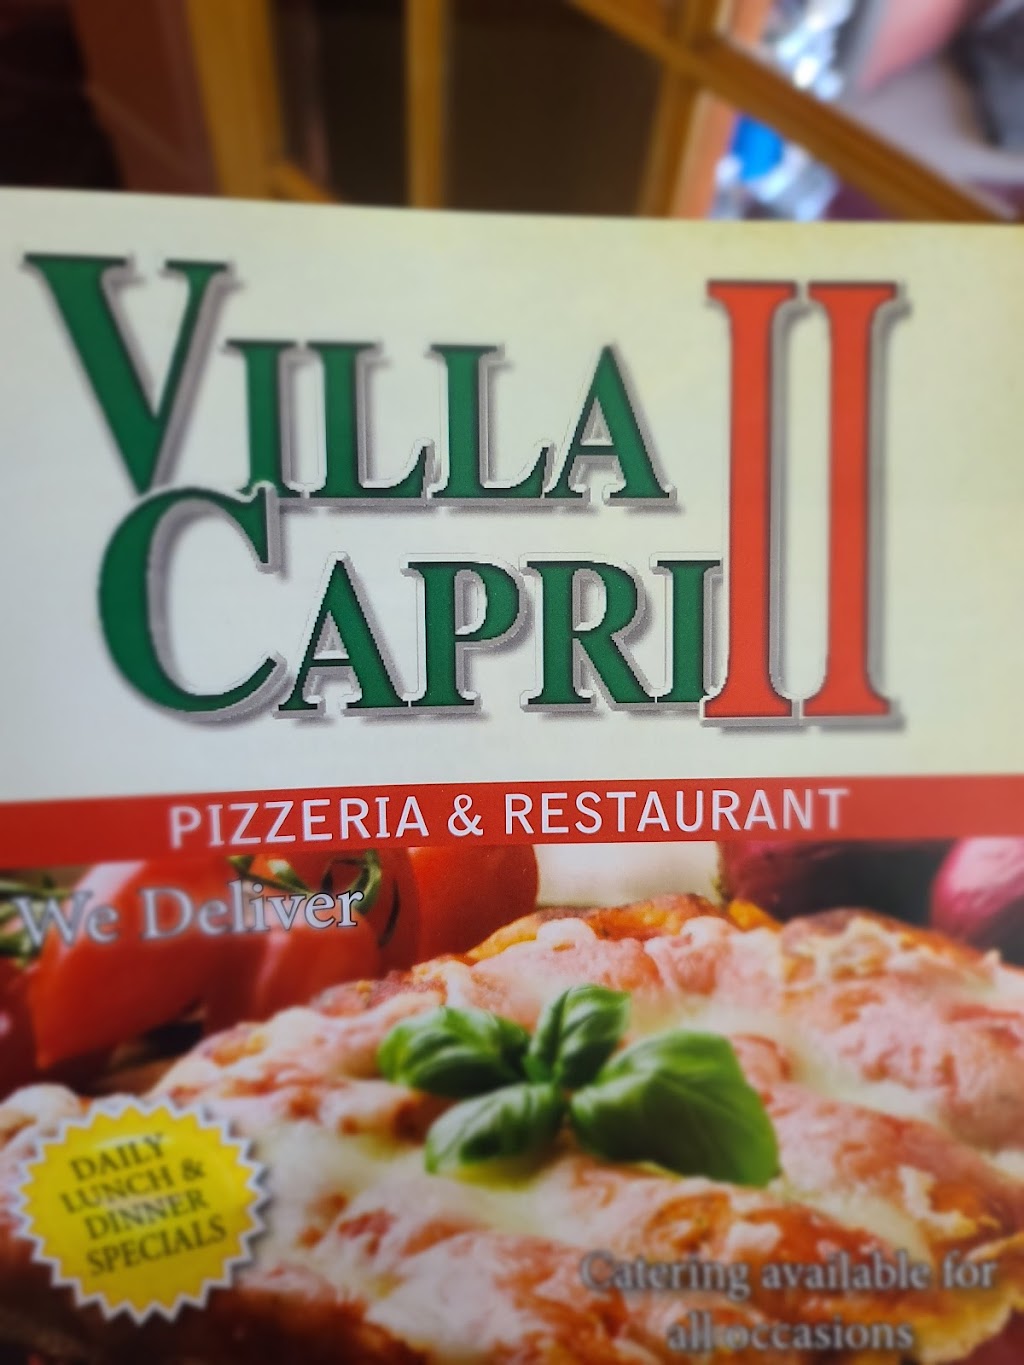 Villa Capri II | 270 S Sparta Ave #102, Sparta Township, NJ 07871 | Phone: (973) 729-6654